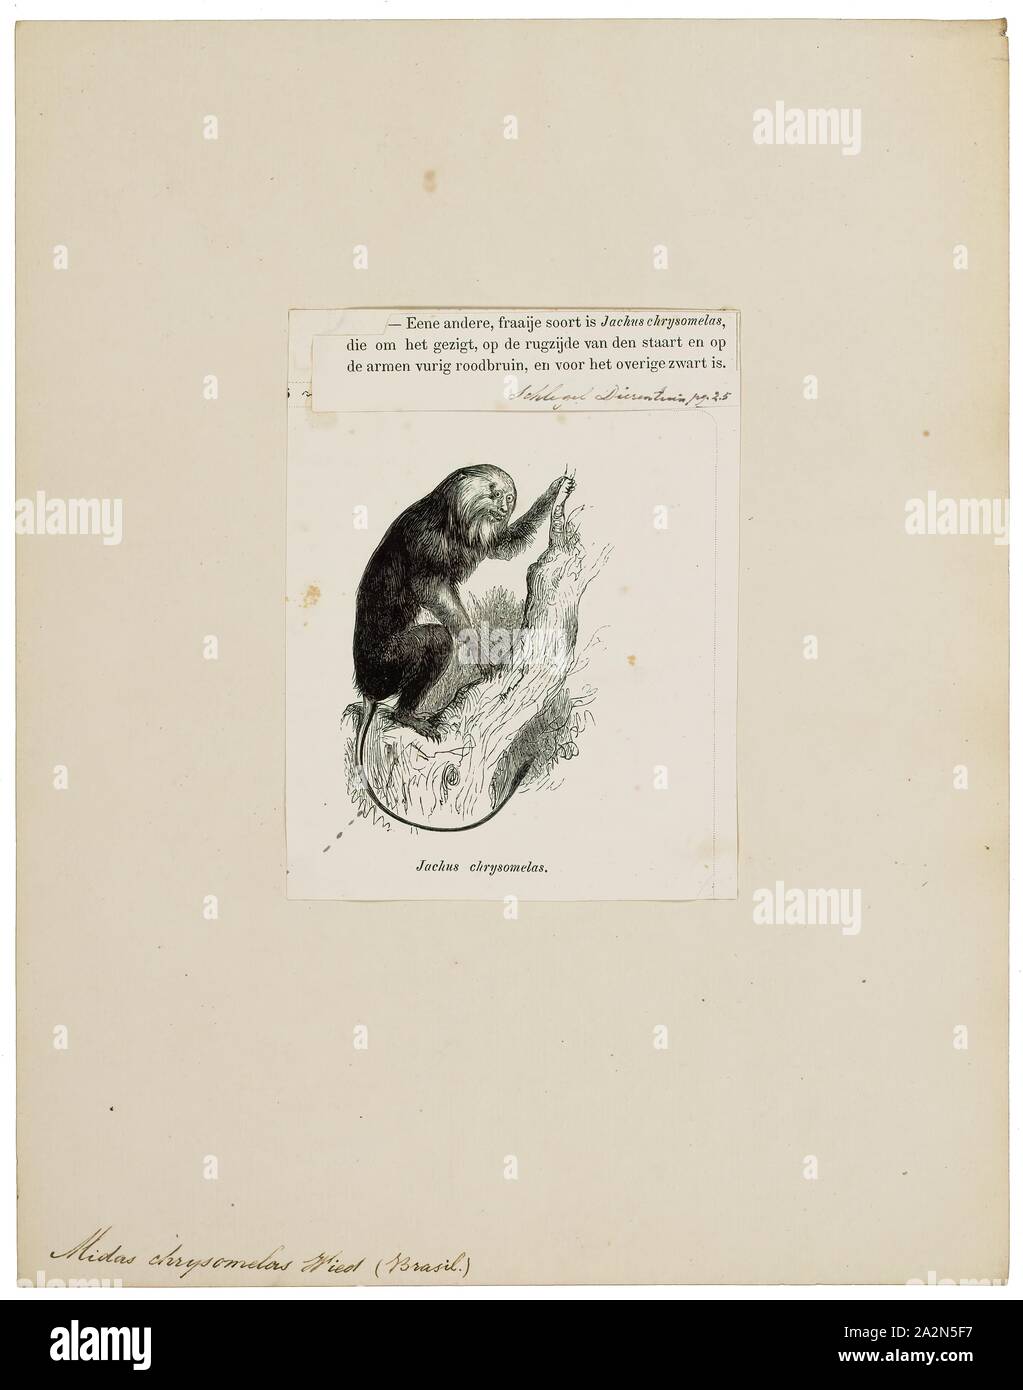 Midas chrysomelas, Imprimer, 1872 Banque D'Images